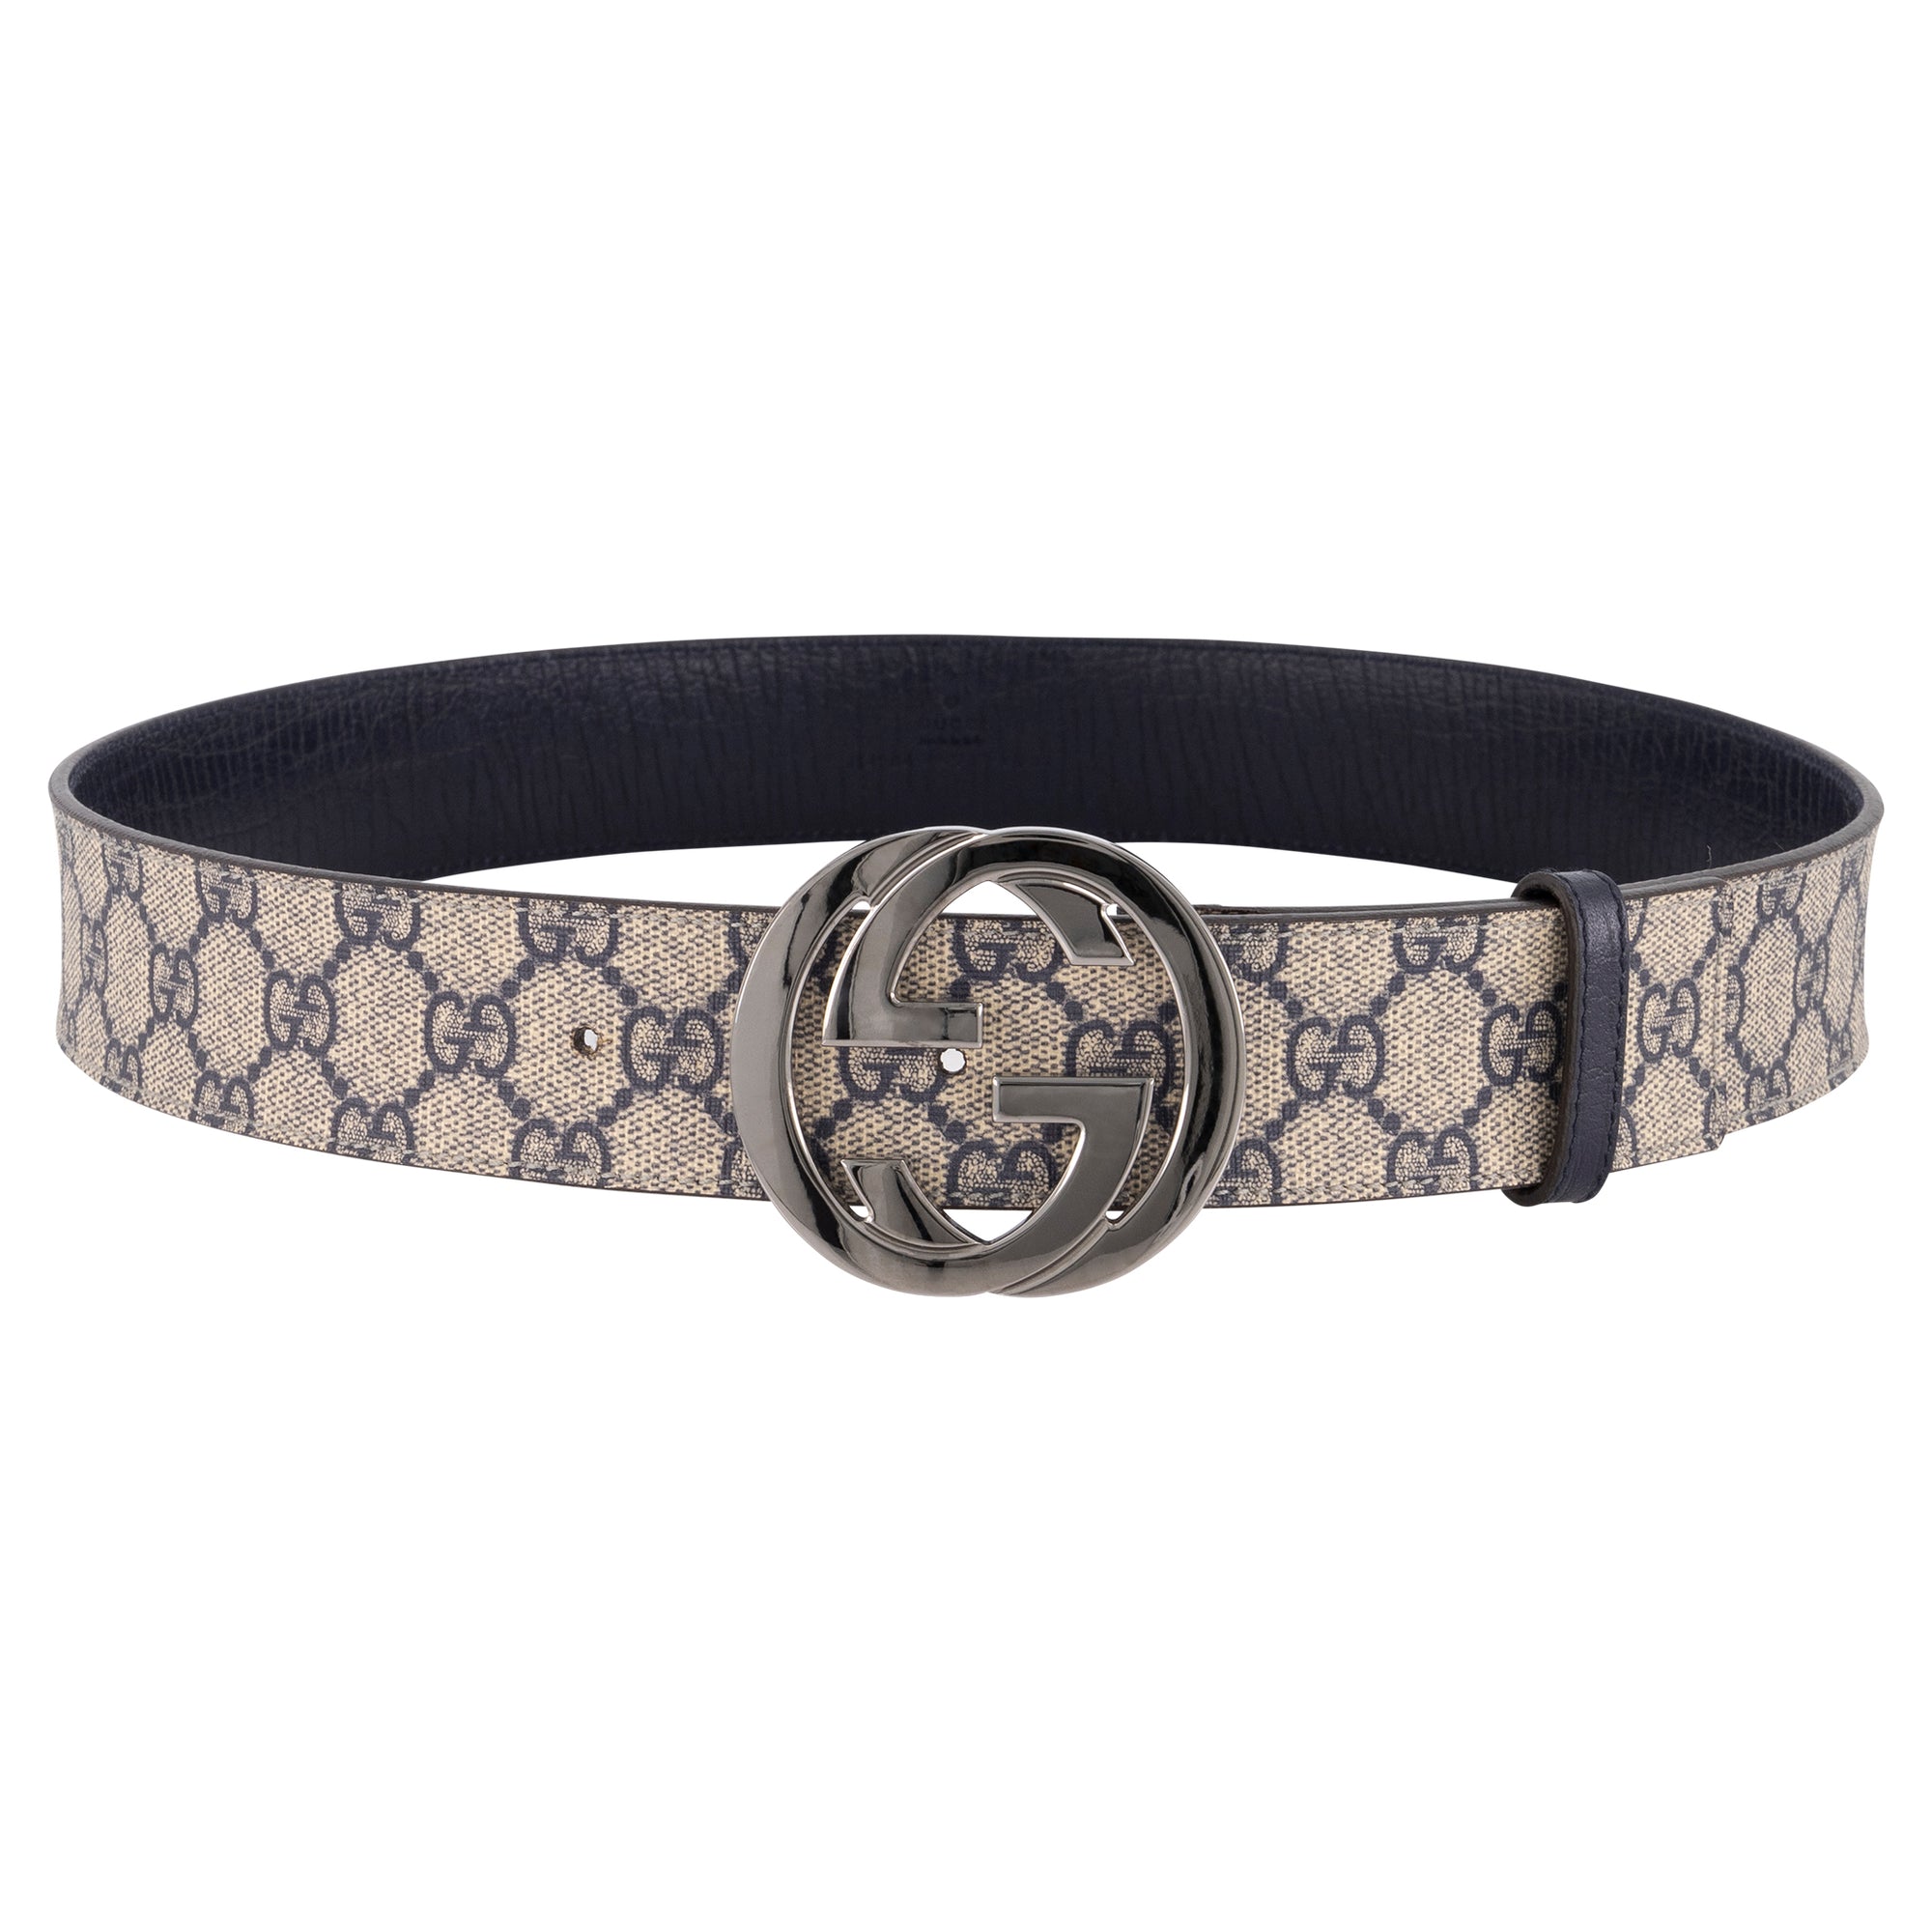 Gucci Monogramm print belt.